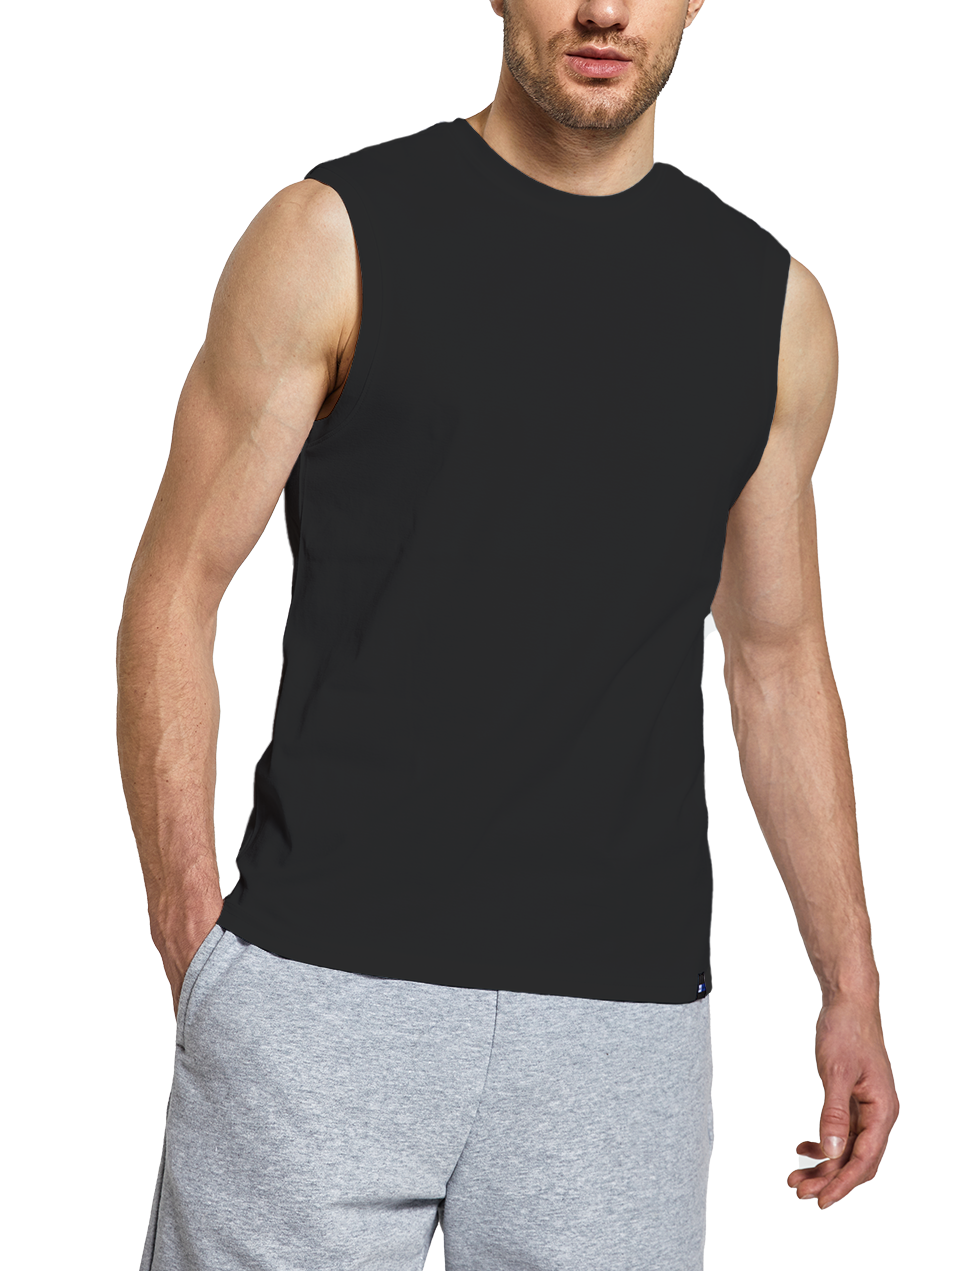 Men's Sleeveless Muscle Tee Shirts (Regular & Big Men)